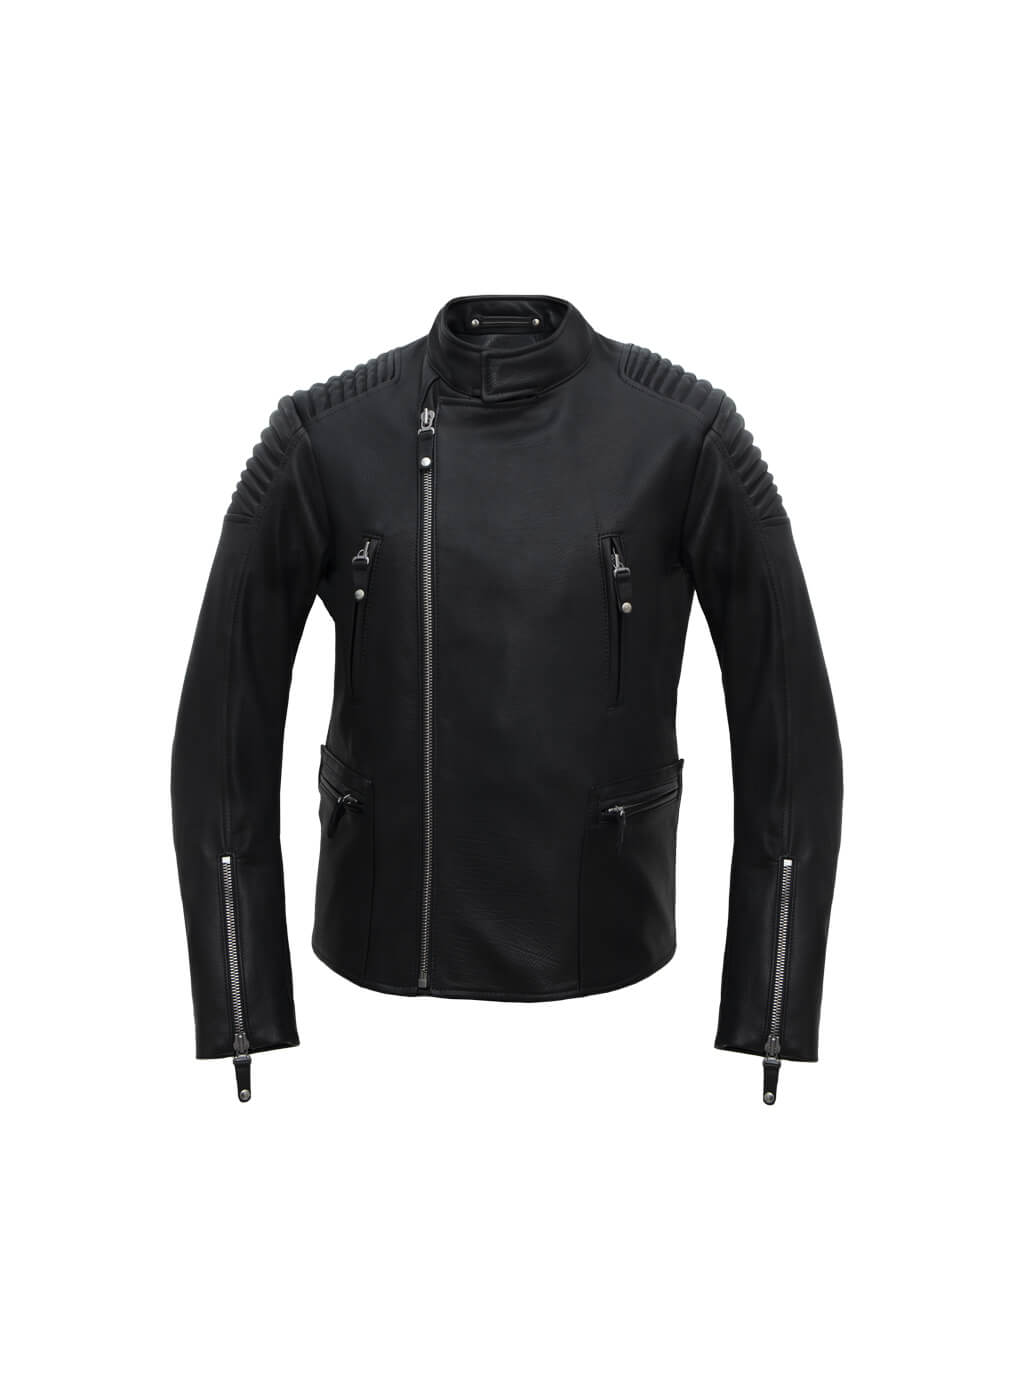 Nappa Leather Jacket Men “Goodwood”, black